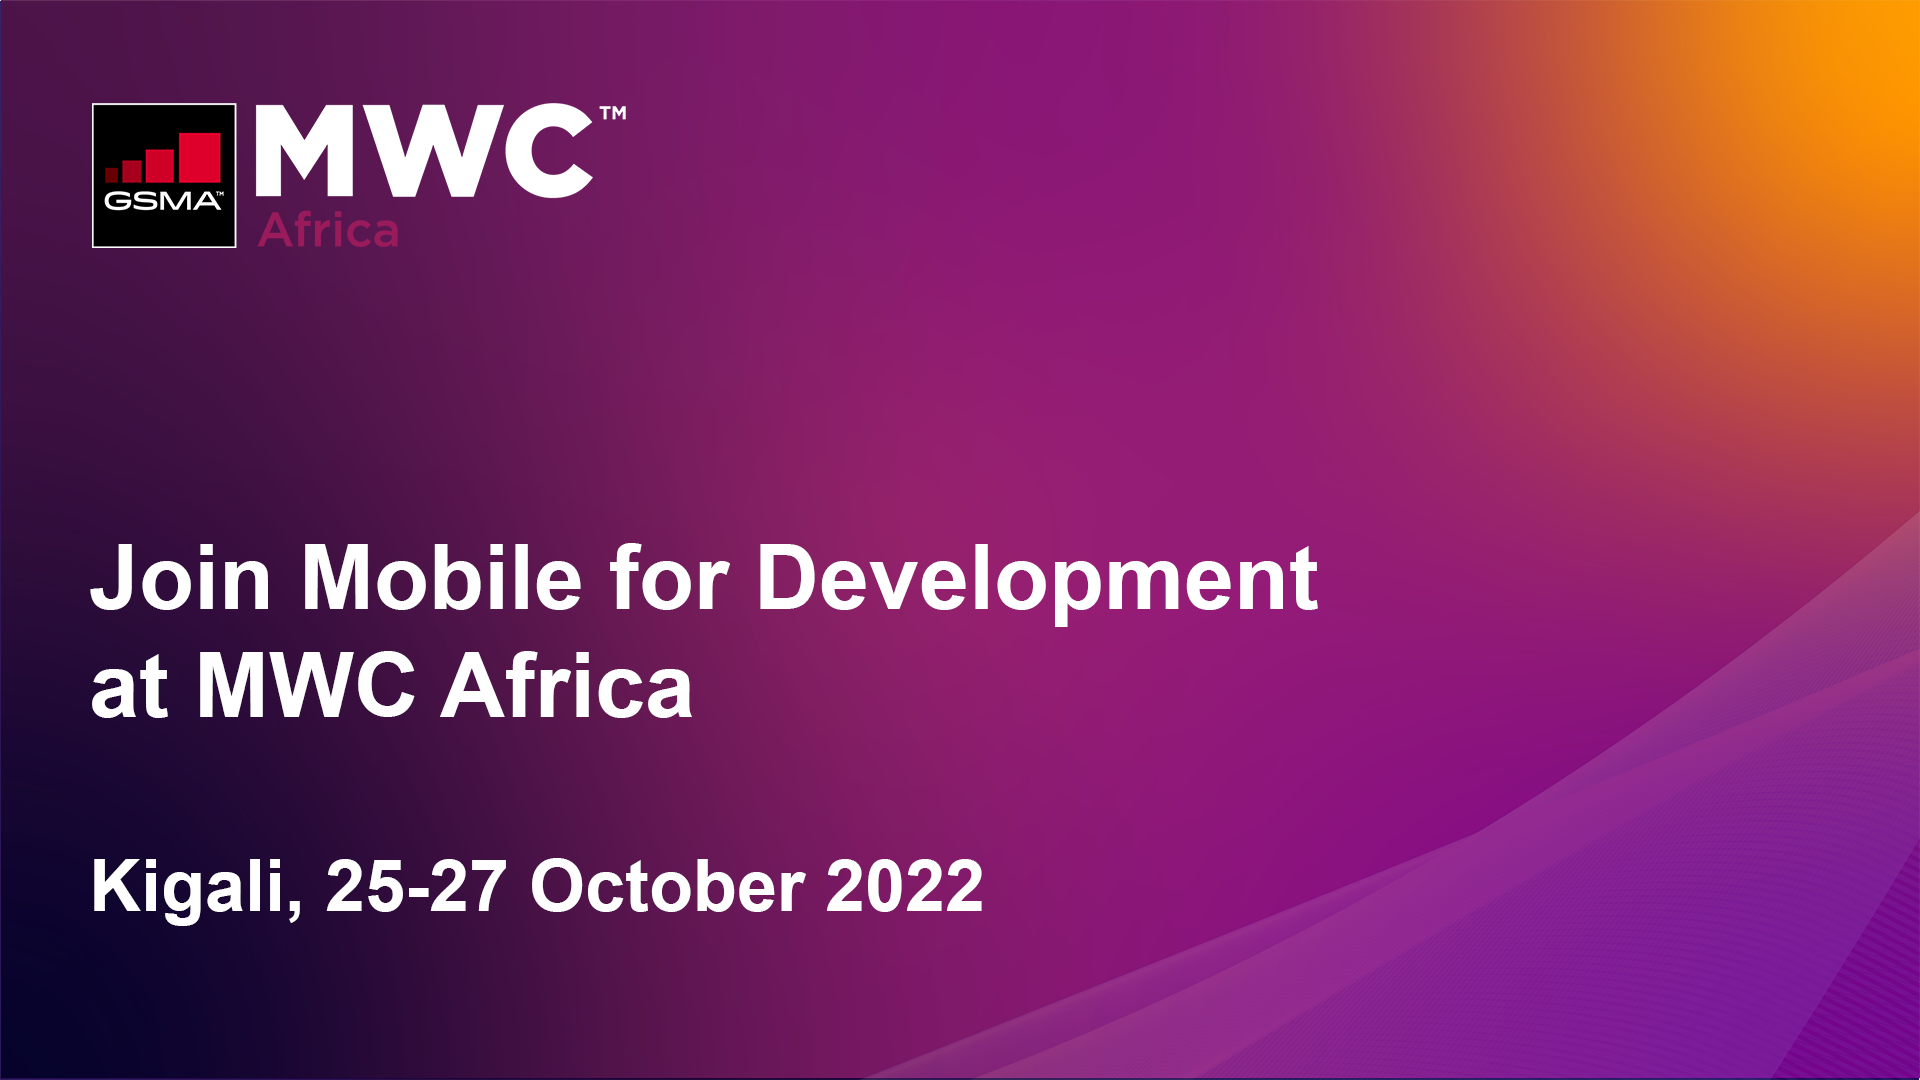 MWC Africa 2022